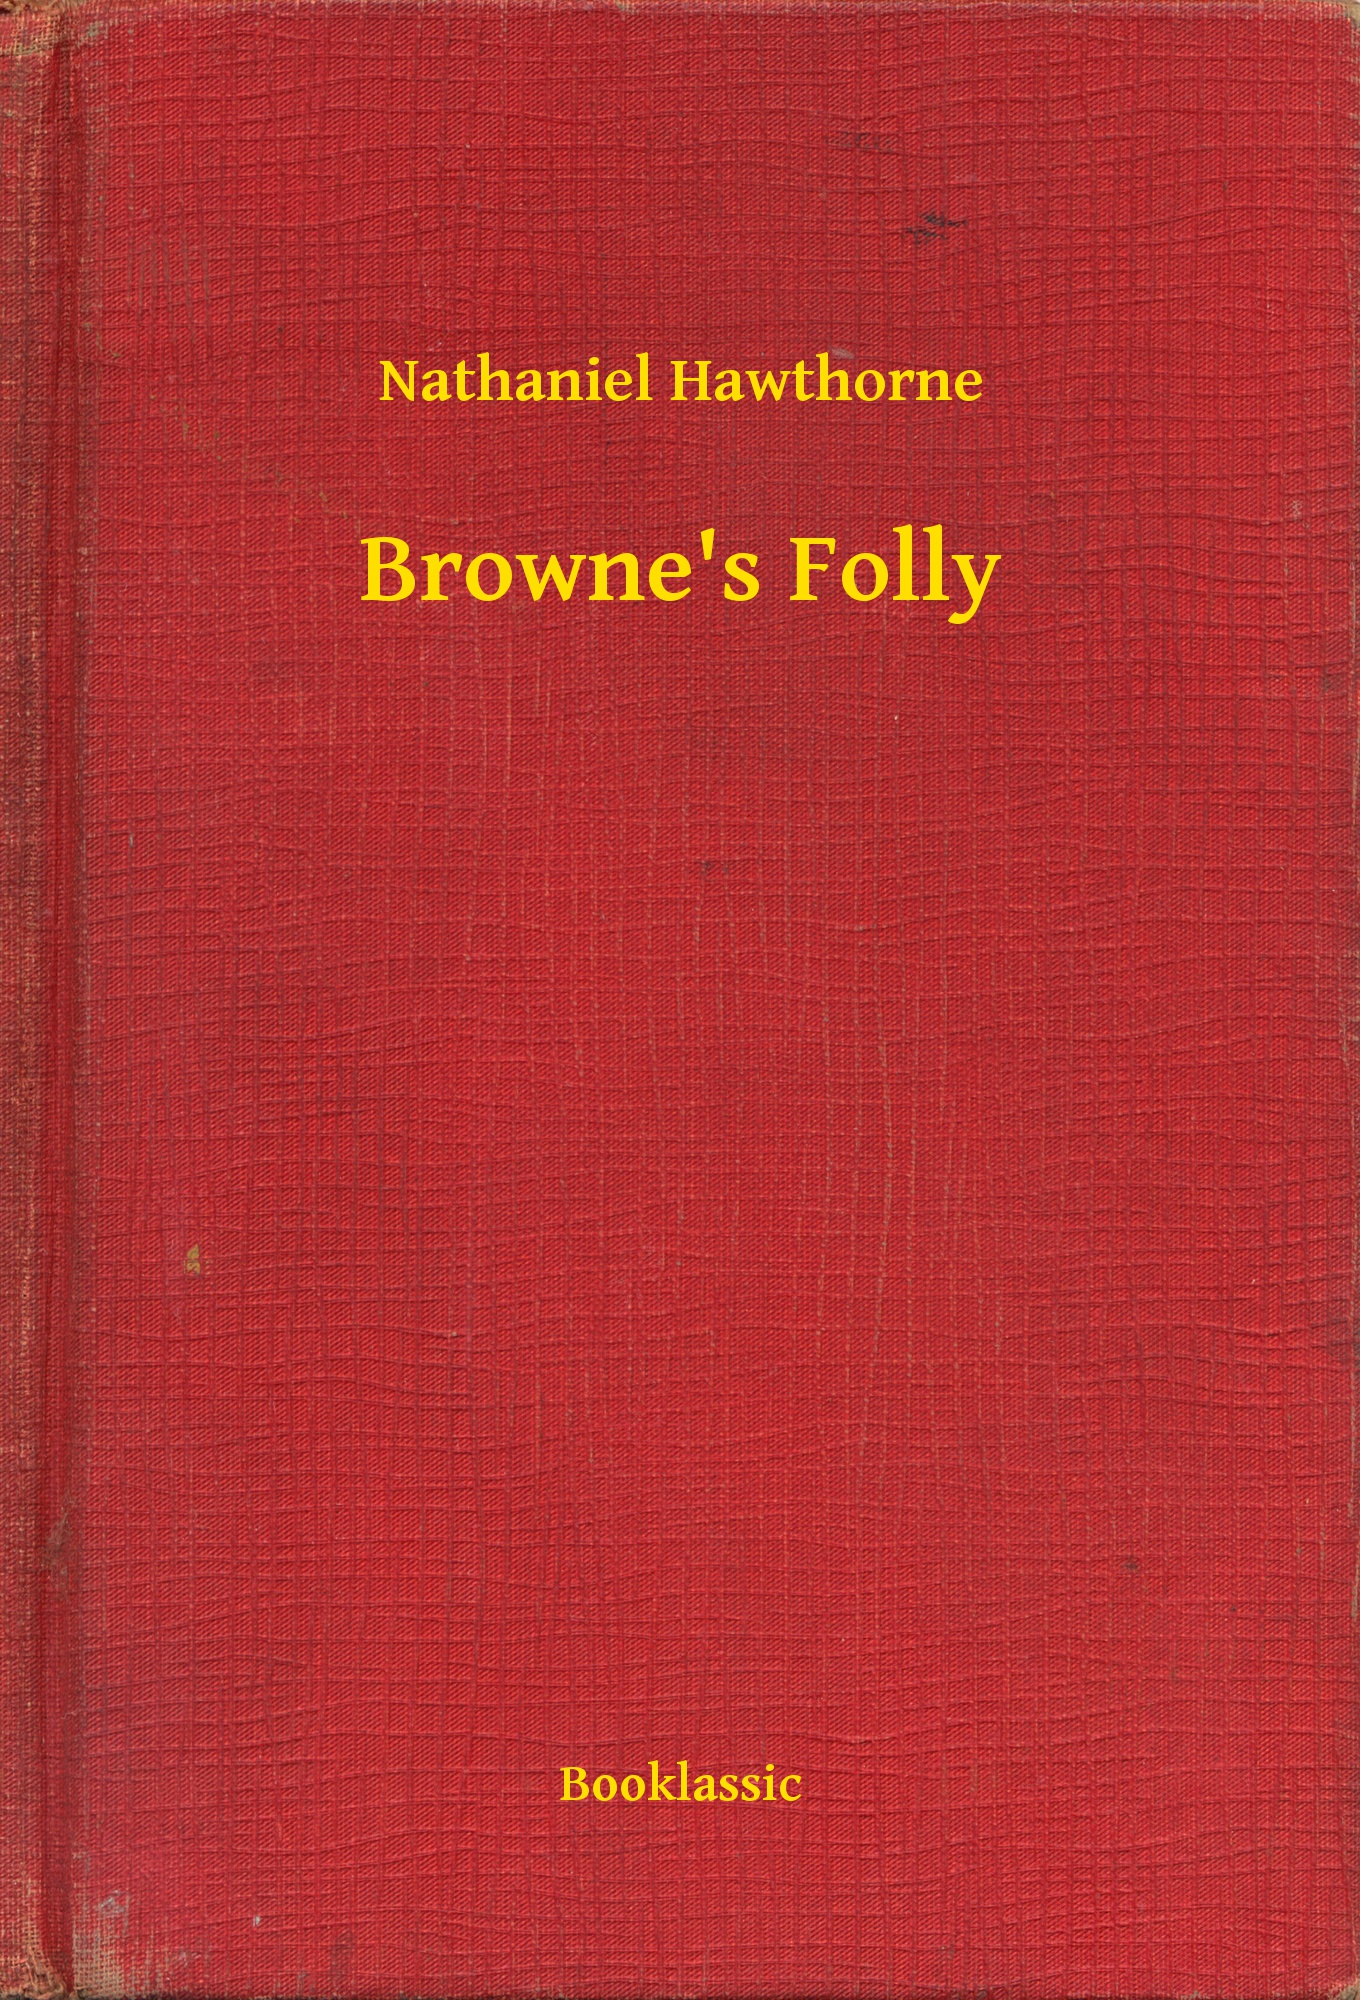 Browne"s Folly